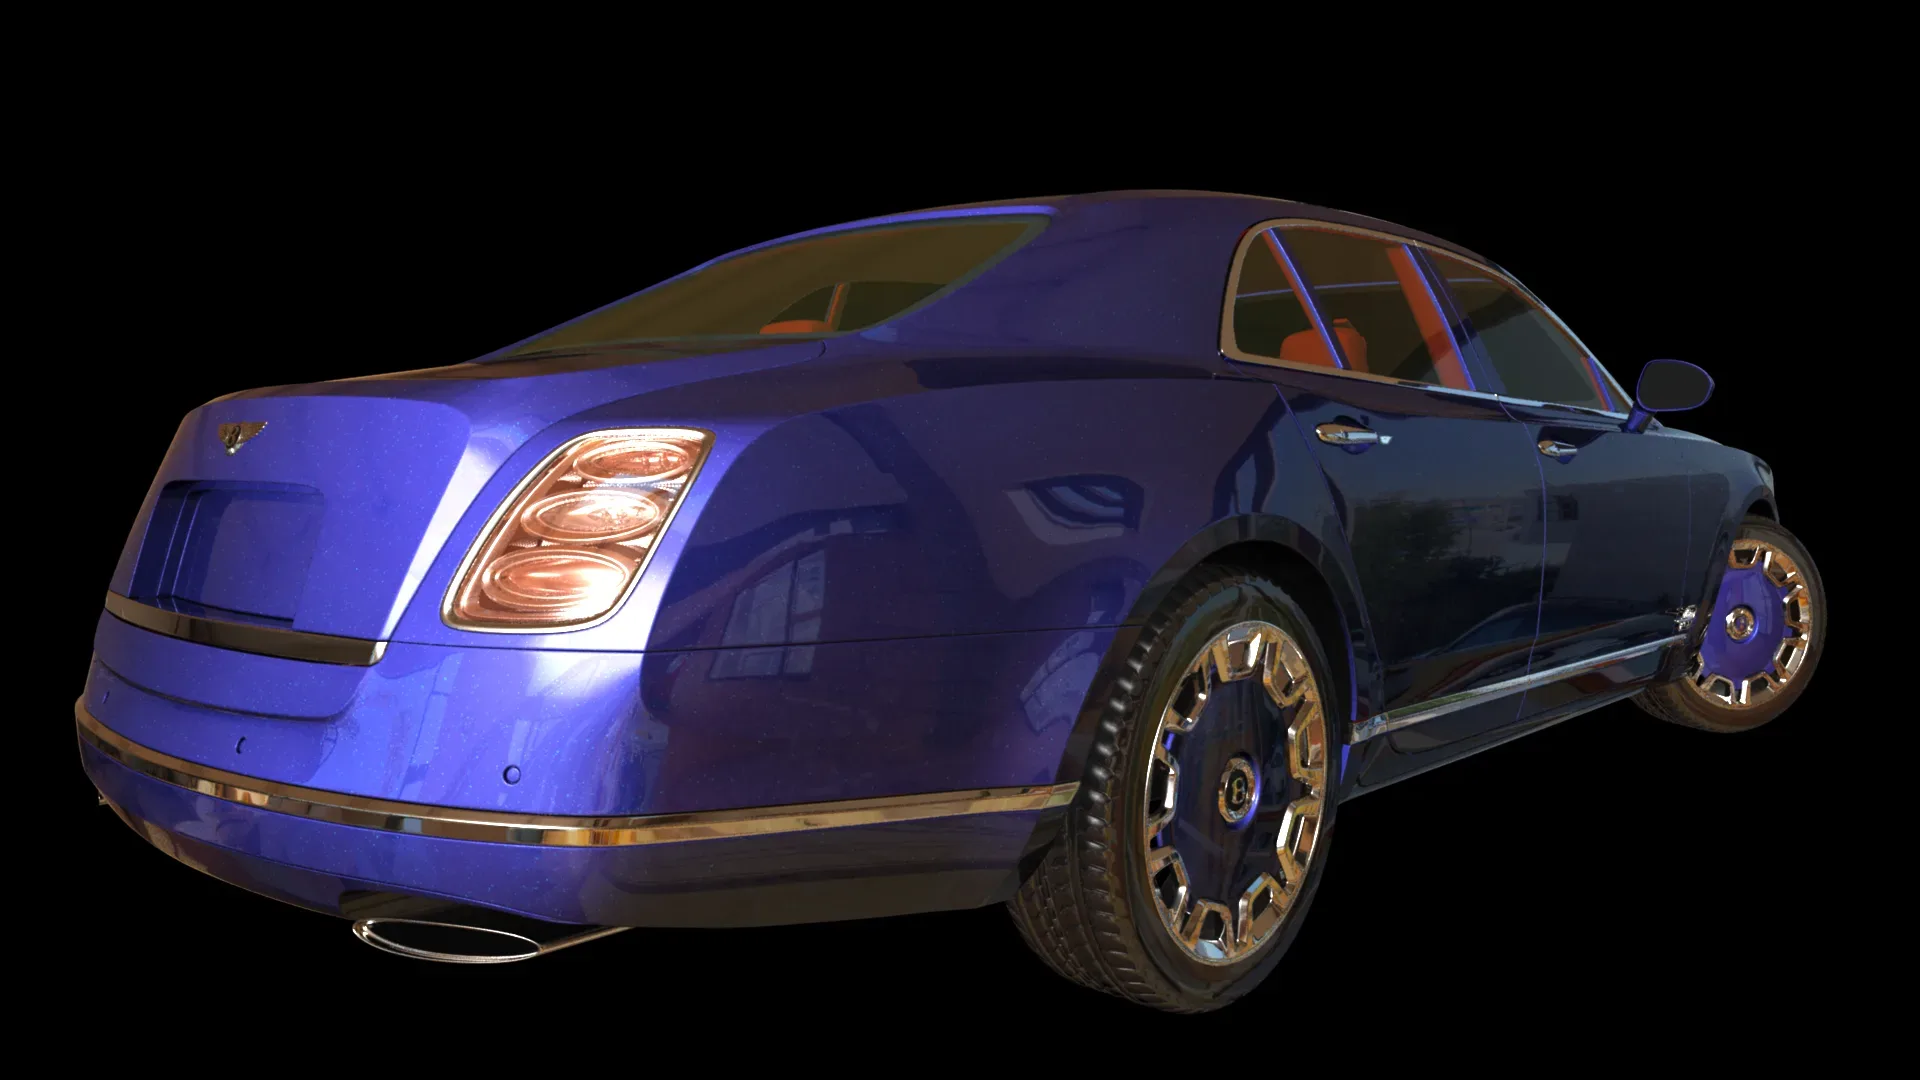 Bentley Mulsanne 2011